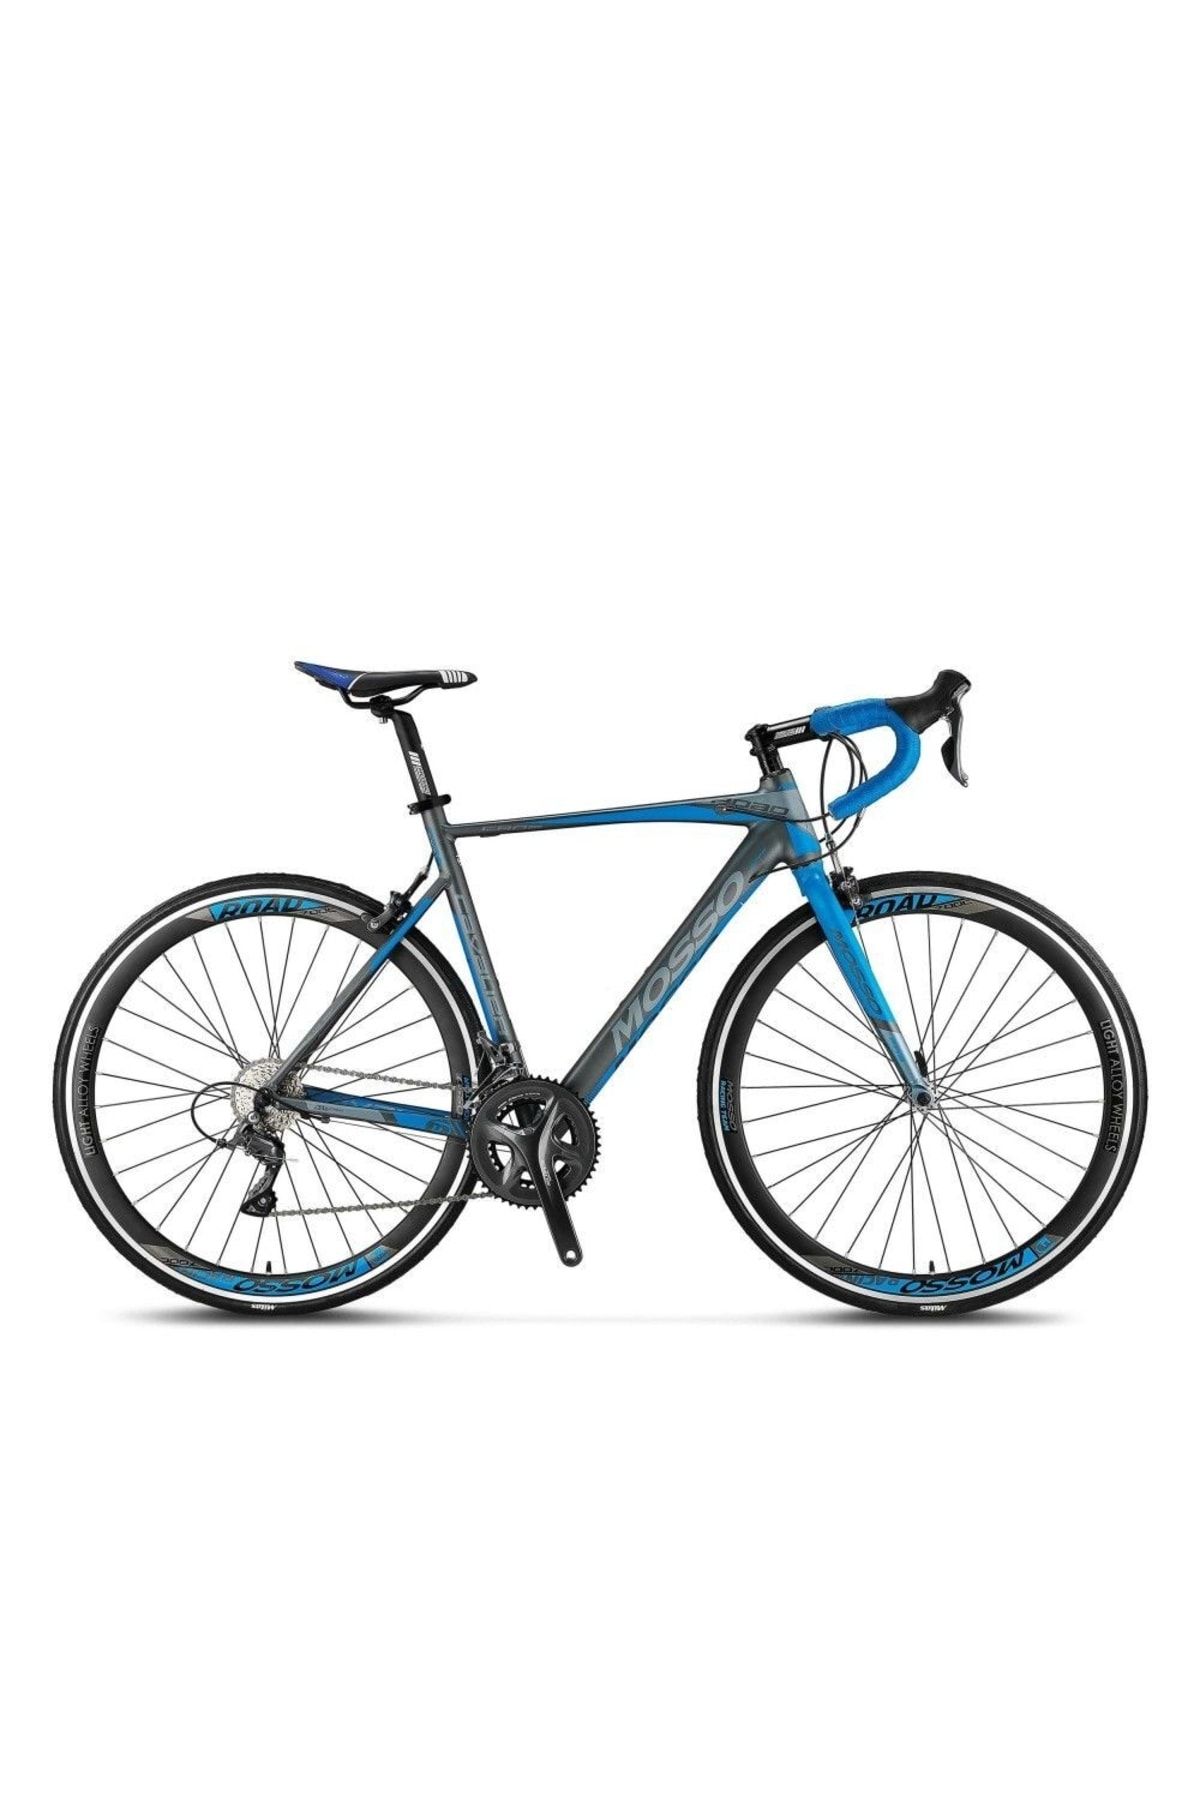 Mosso Cavalier 700 Clarıs Yol Yarış Bisikleti 54cm Antrasit - Mavi